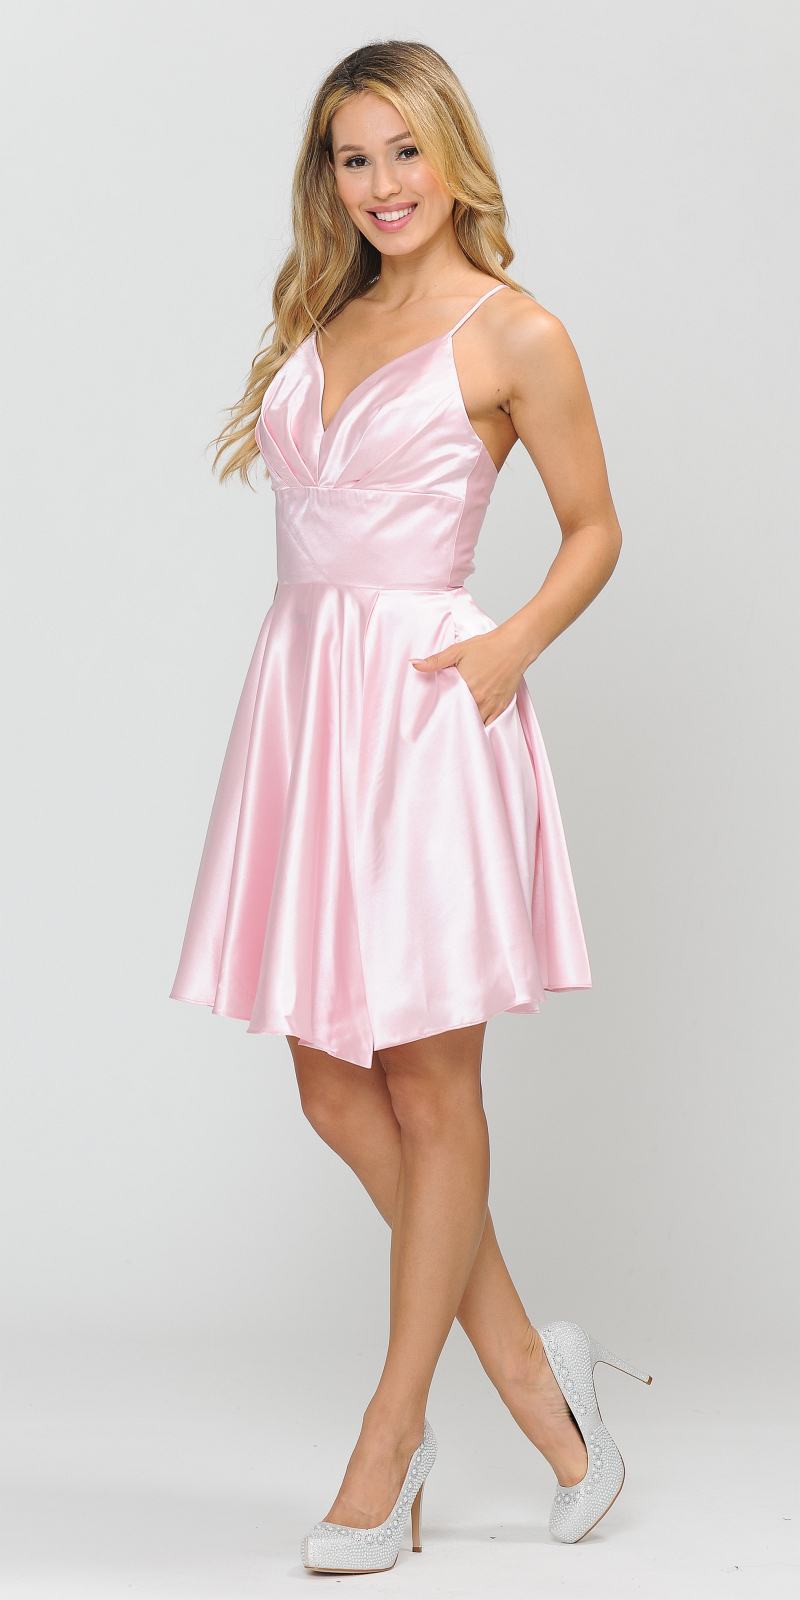 Poly USA 8536 Pink Short Homecoming Romper Dress V-Neck